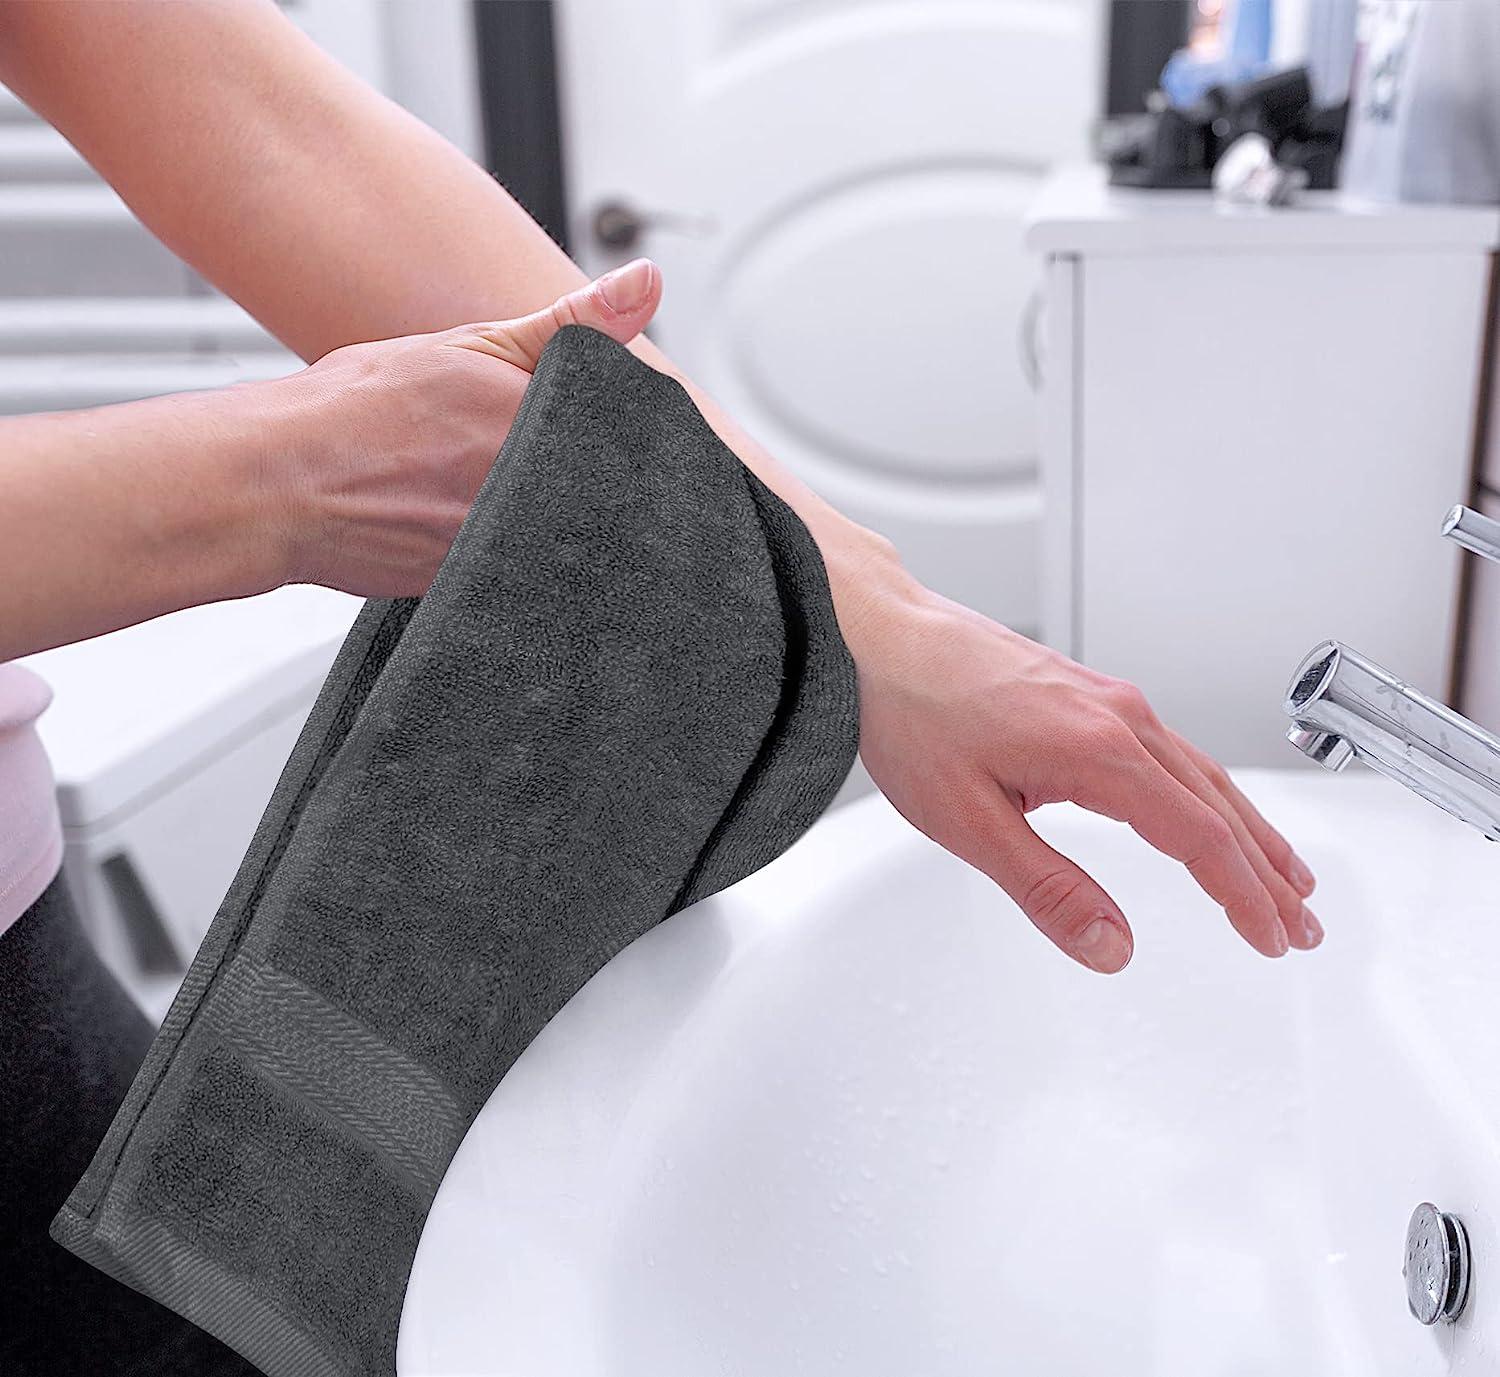 Utopia Towels 6 Pack Premium Hand Towels Set, (16 x 28 inches) 100